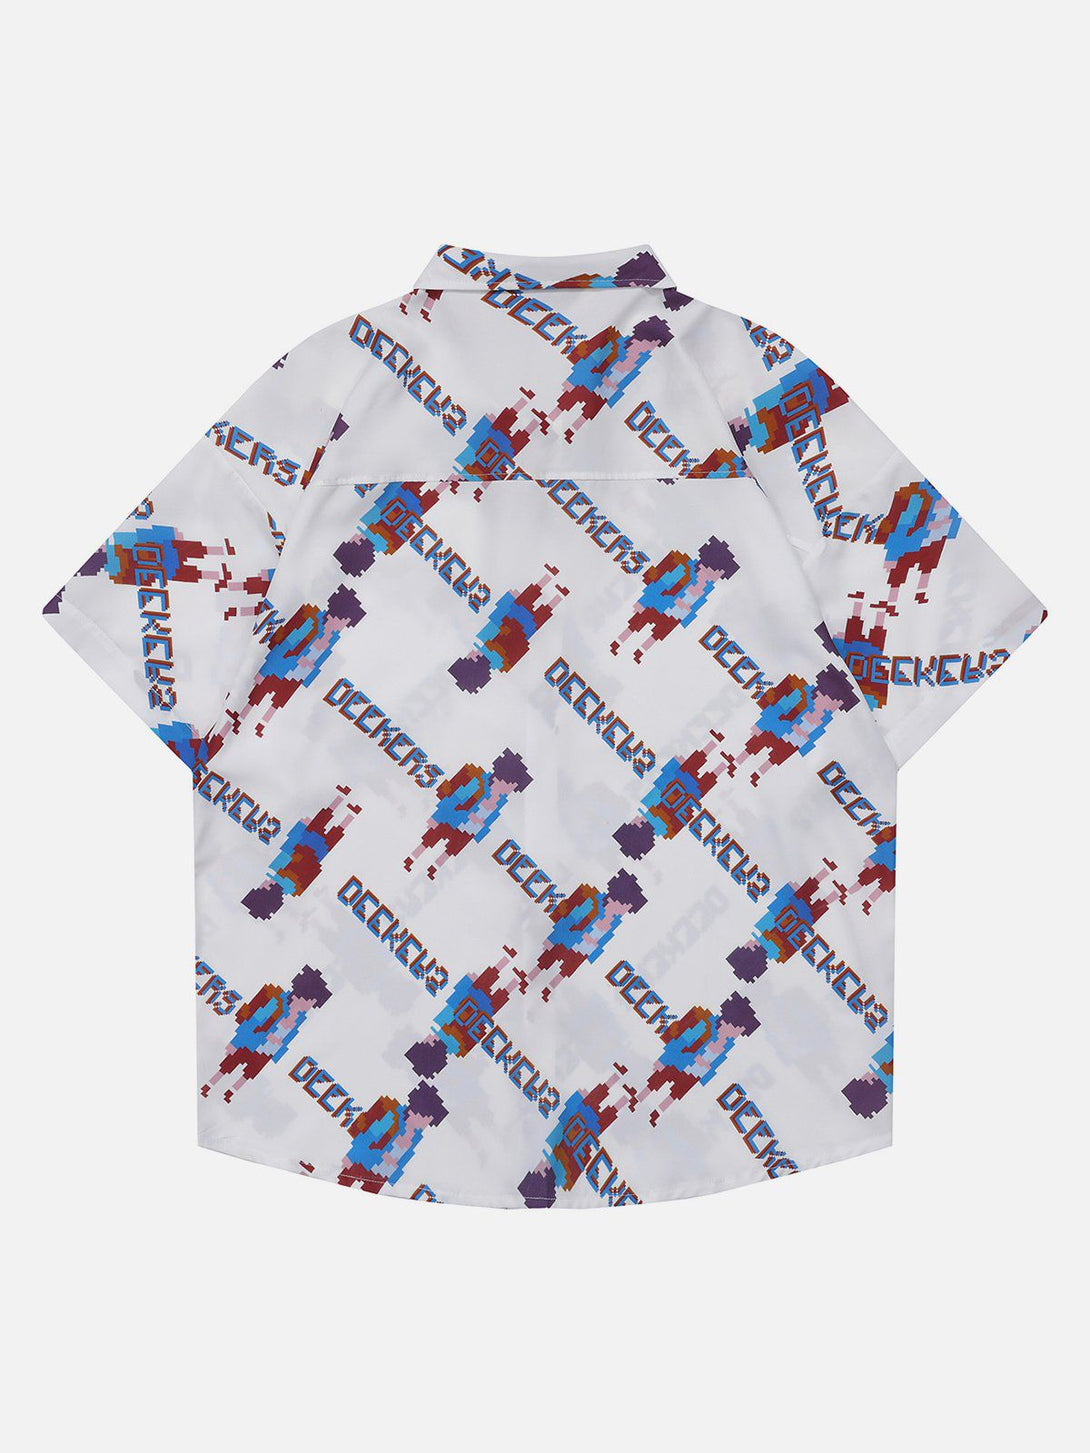 Majesda® - Full Print Pixel Cartoon Character Short Sleeve Shirt outfit ideas streetwear fashion